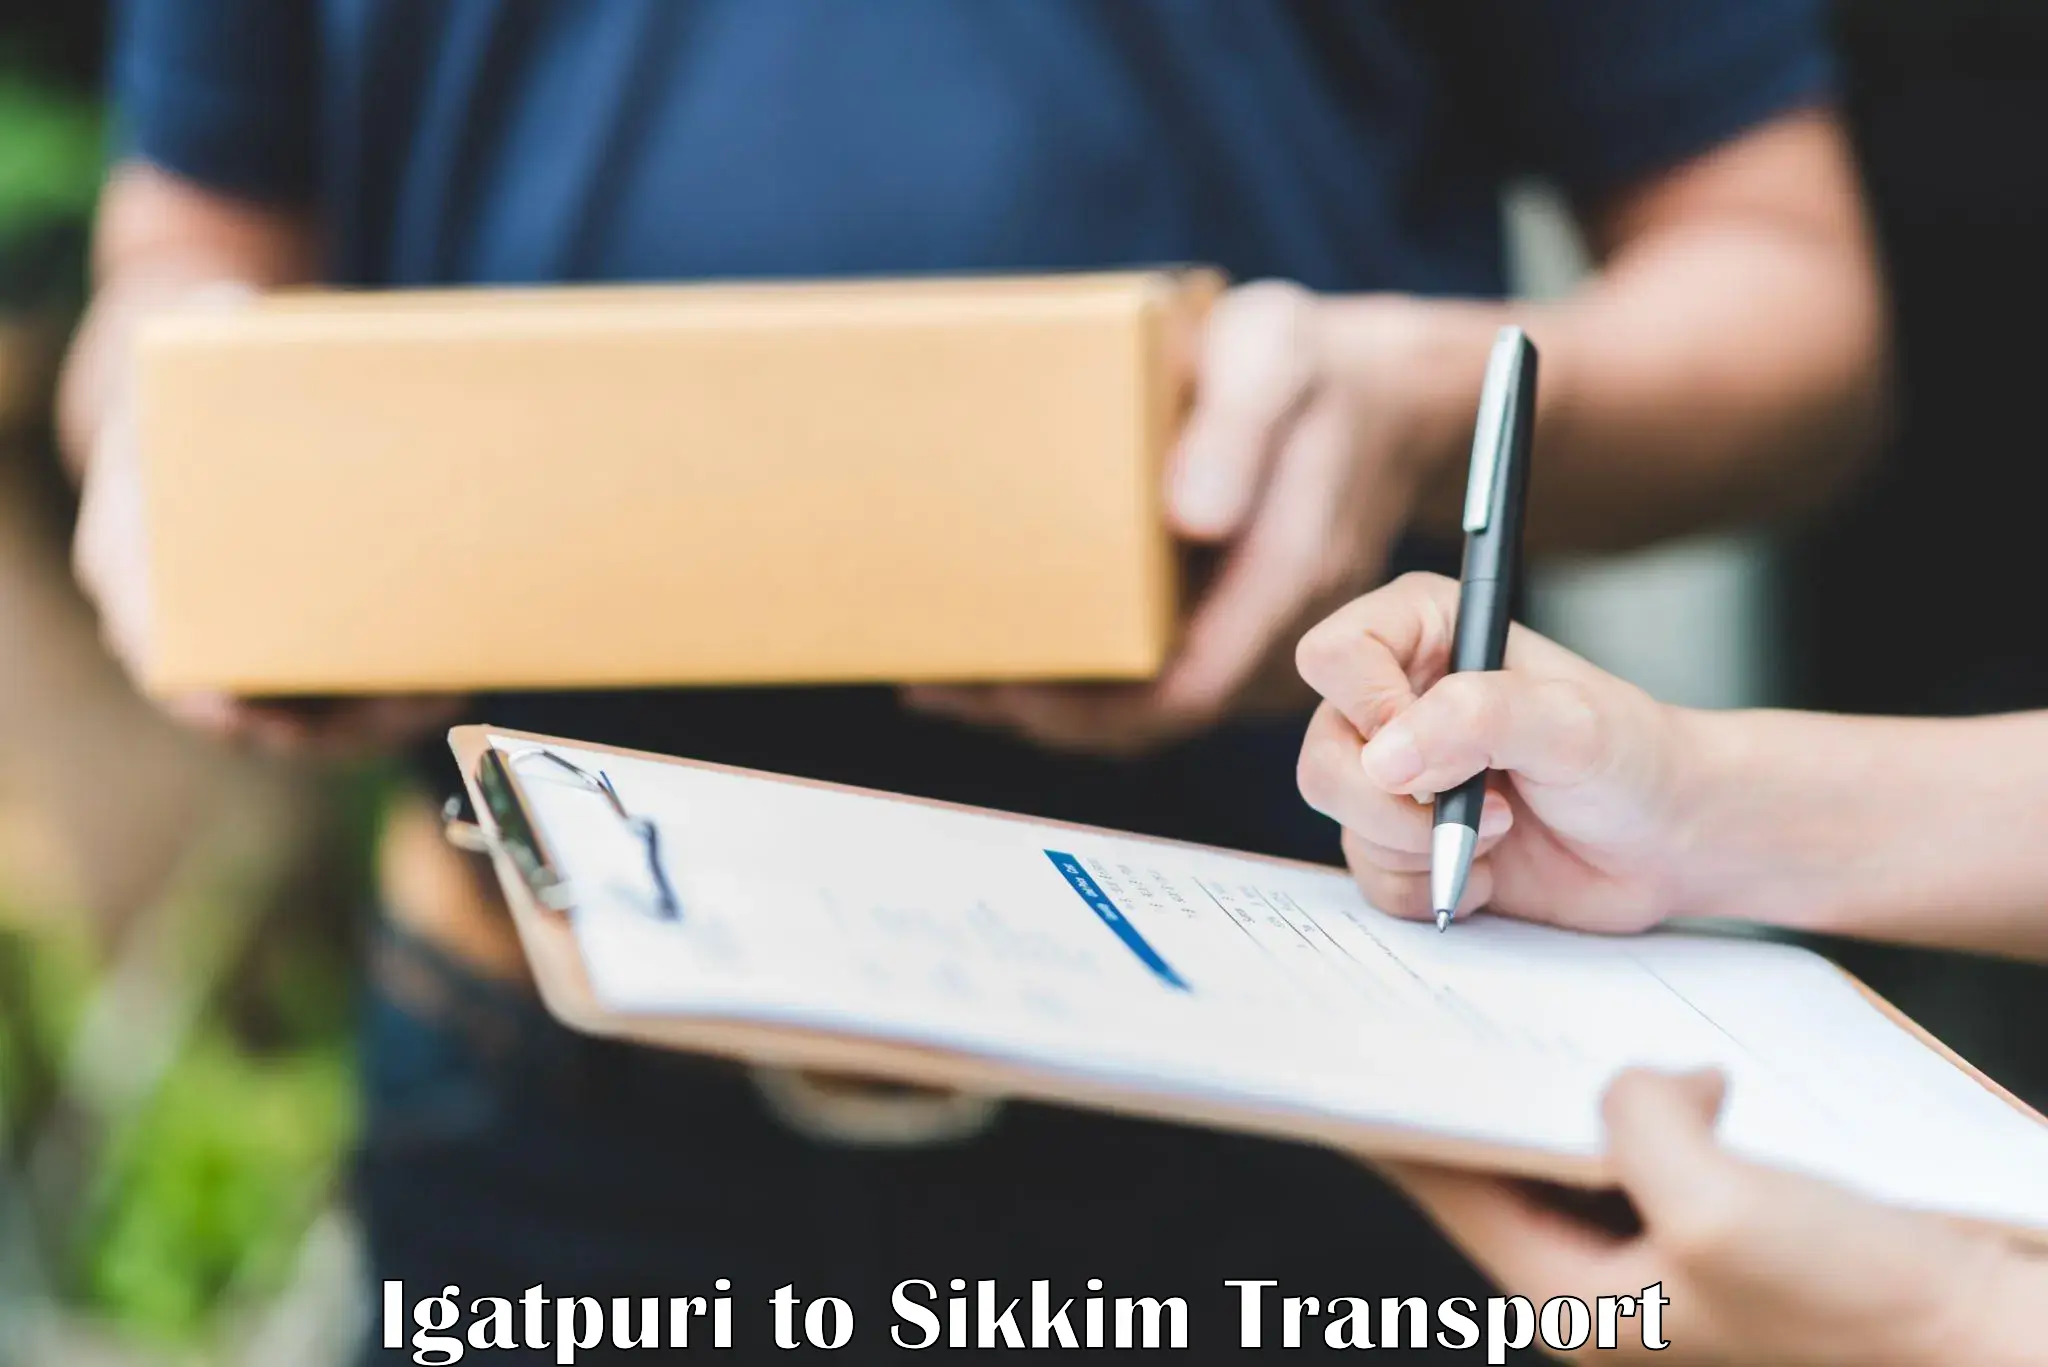 Transport in sharing Igatpuri to Pelling